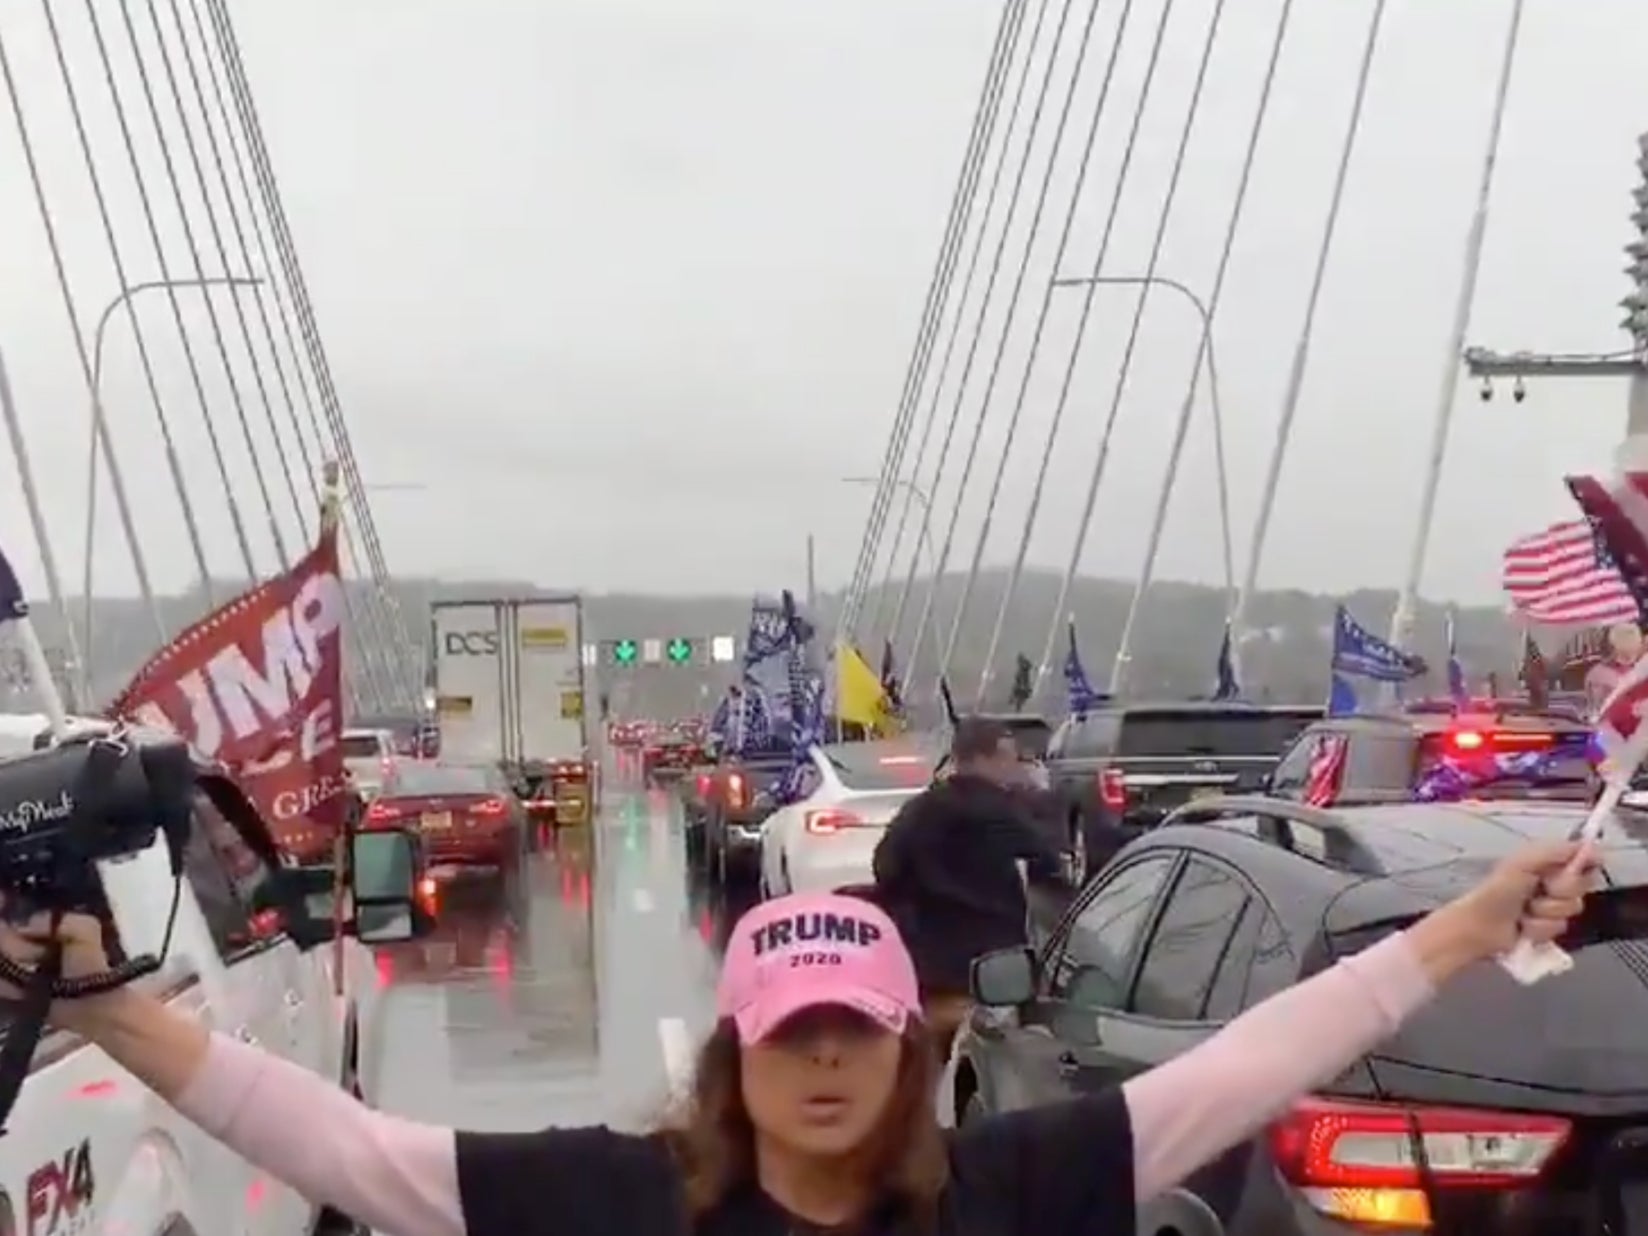 Trump supporters block the Mario Cuomo Bridge in New York on Sunday